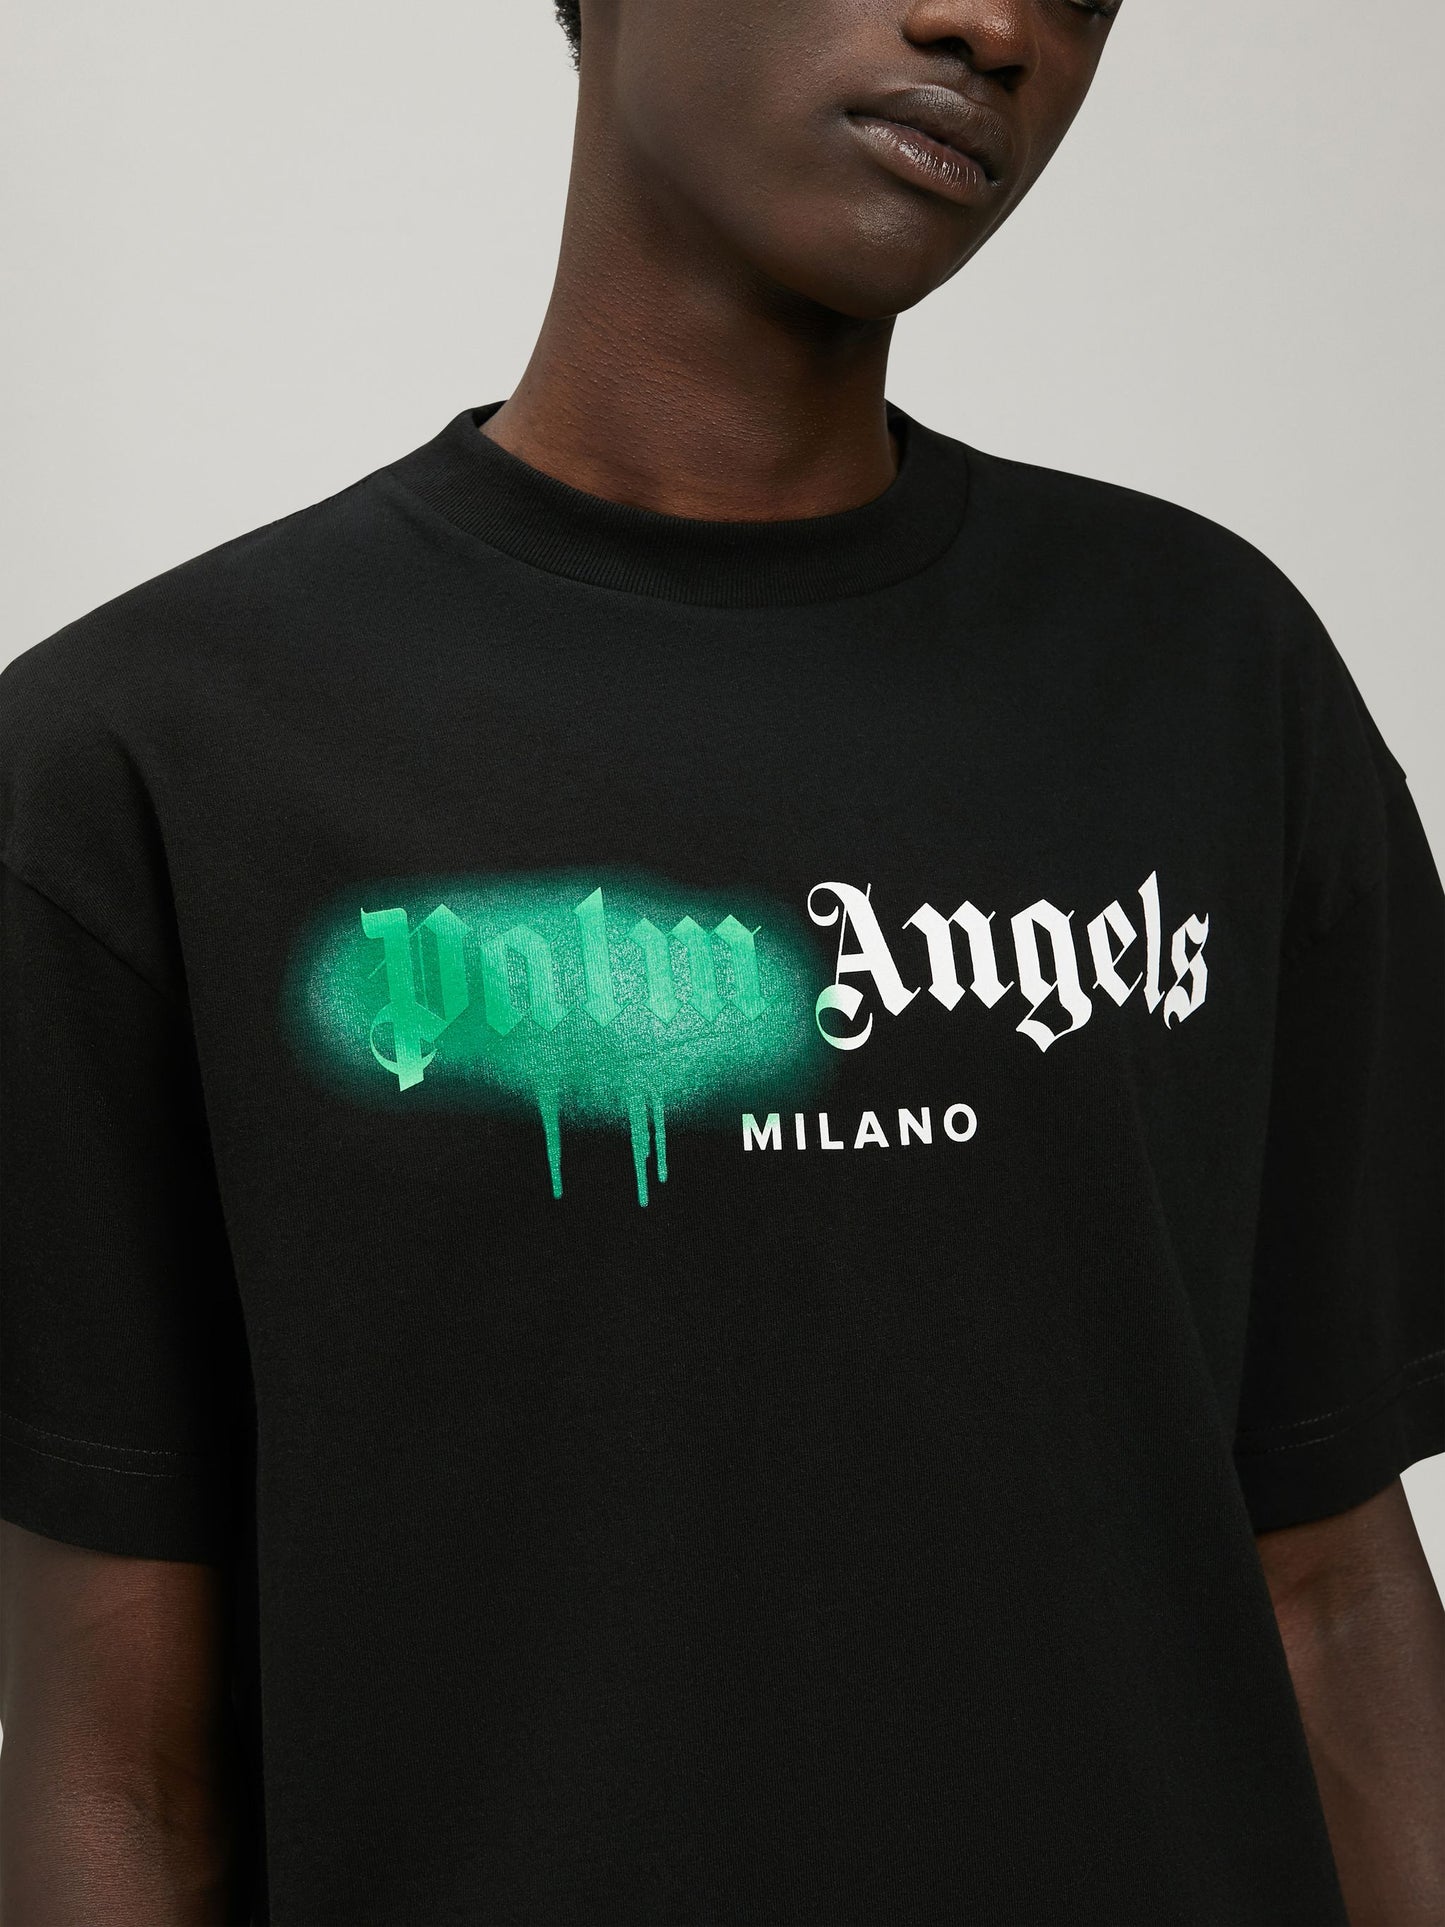 Palm Angels Milano Sprayed T-Shirt Black/Green